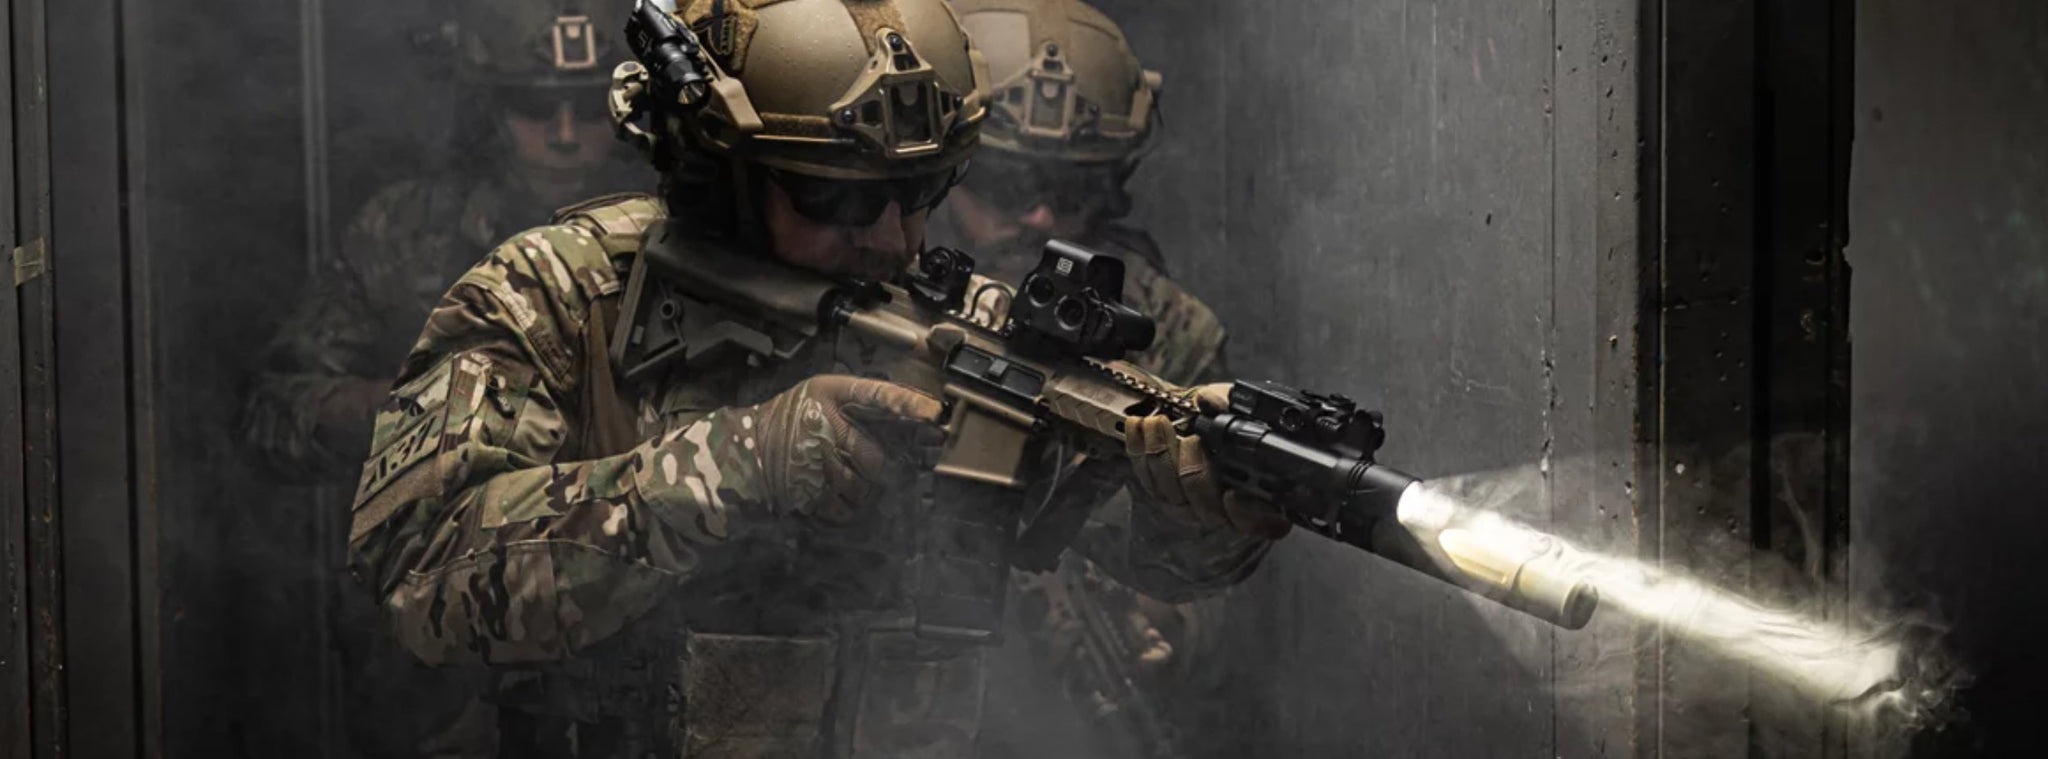 HRT AWLS advanced weapon Light system military tactical use uniform spell close range navigation